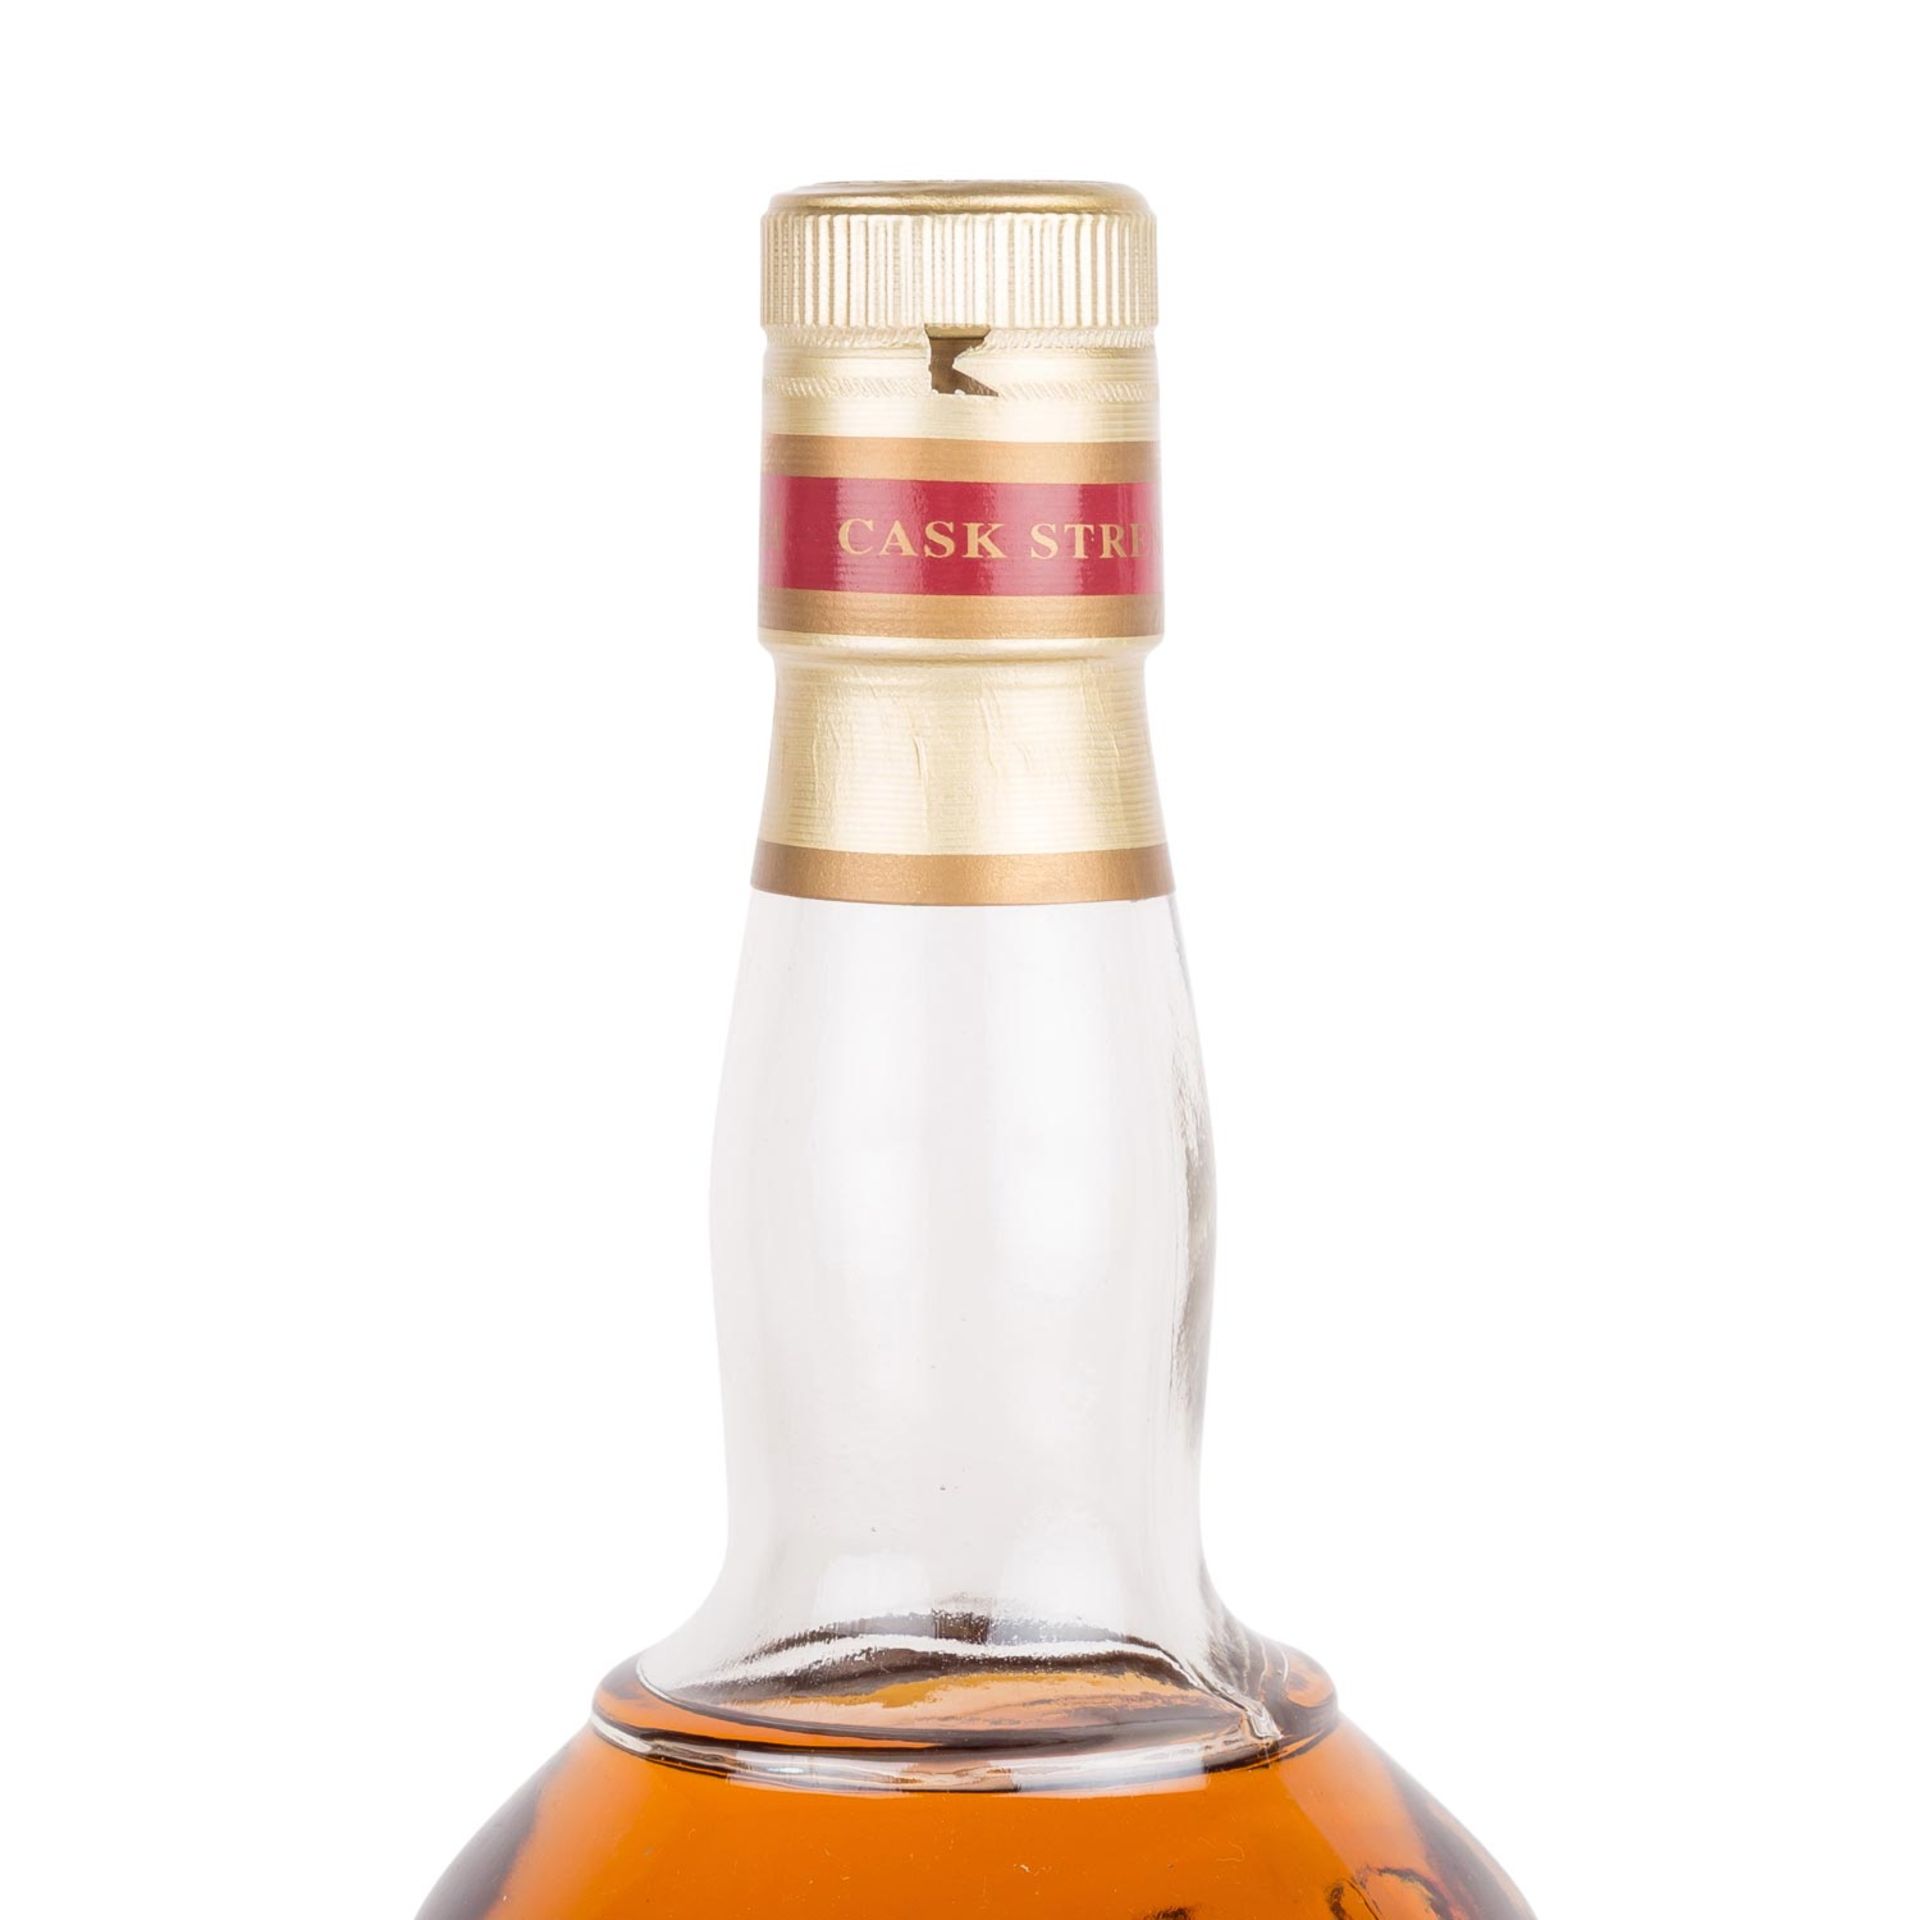 BOWMORE Single Malt Scotch Whisky 'CASK STRENGTH' - Image 4 of 5